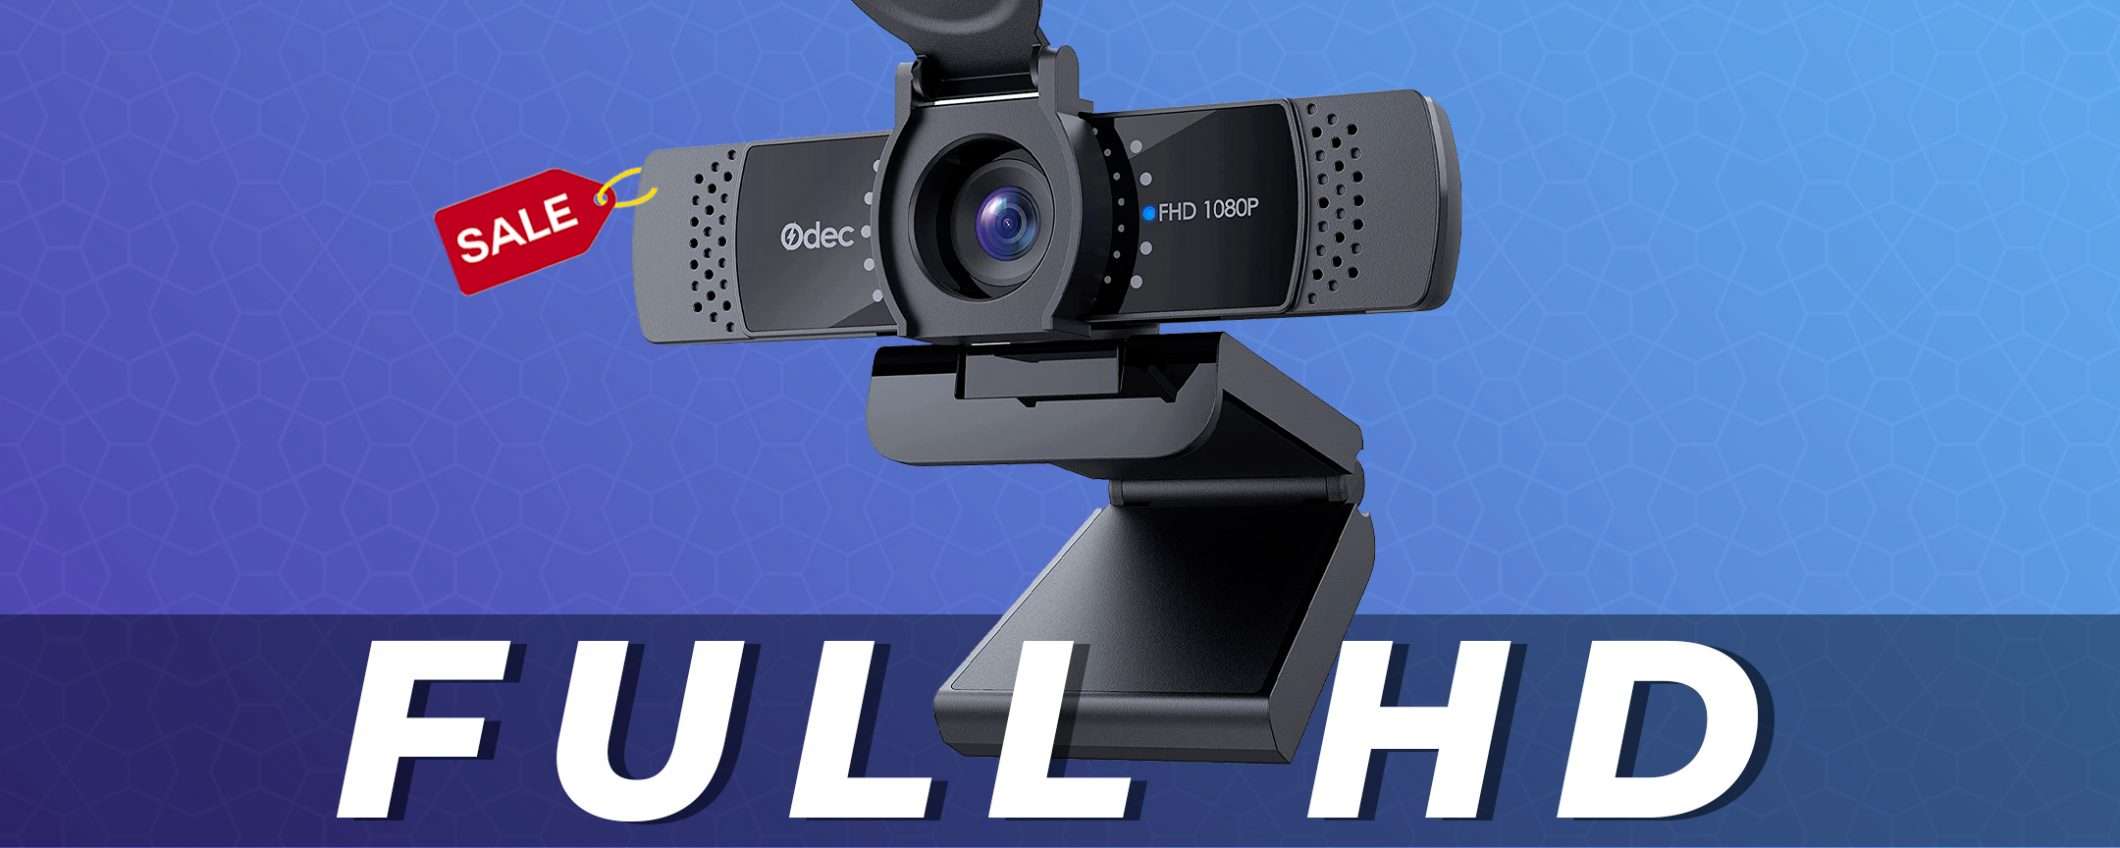 Webcam FullHD in offerta a soli 10€ [CODICE SCONTO]